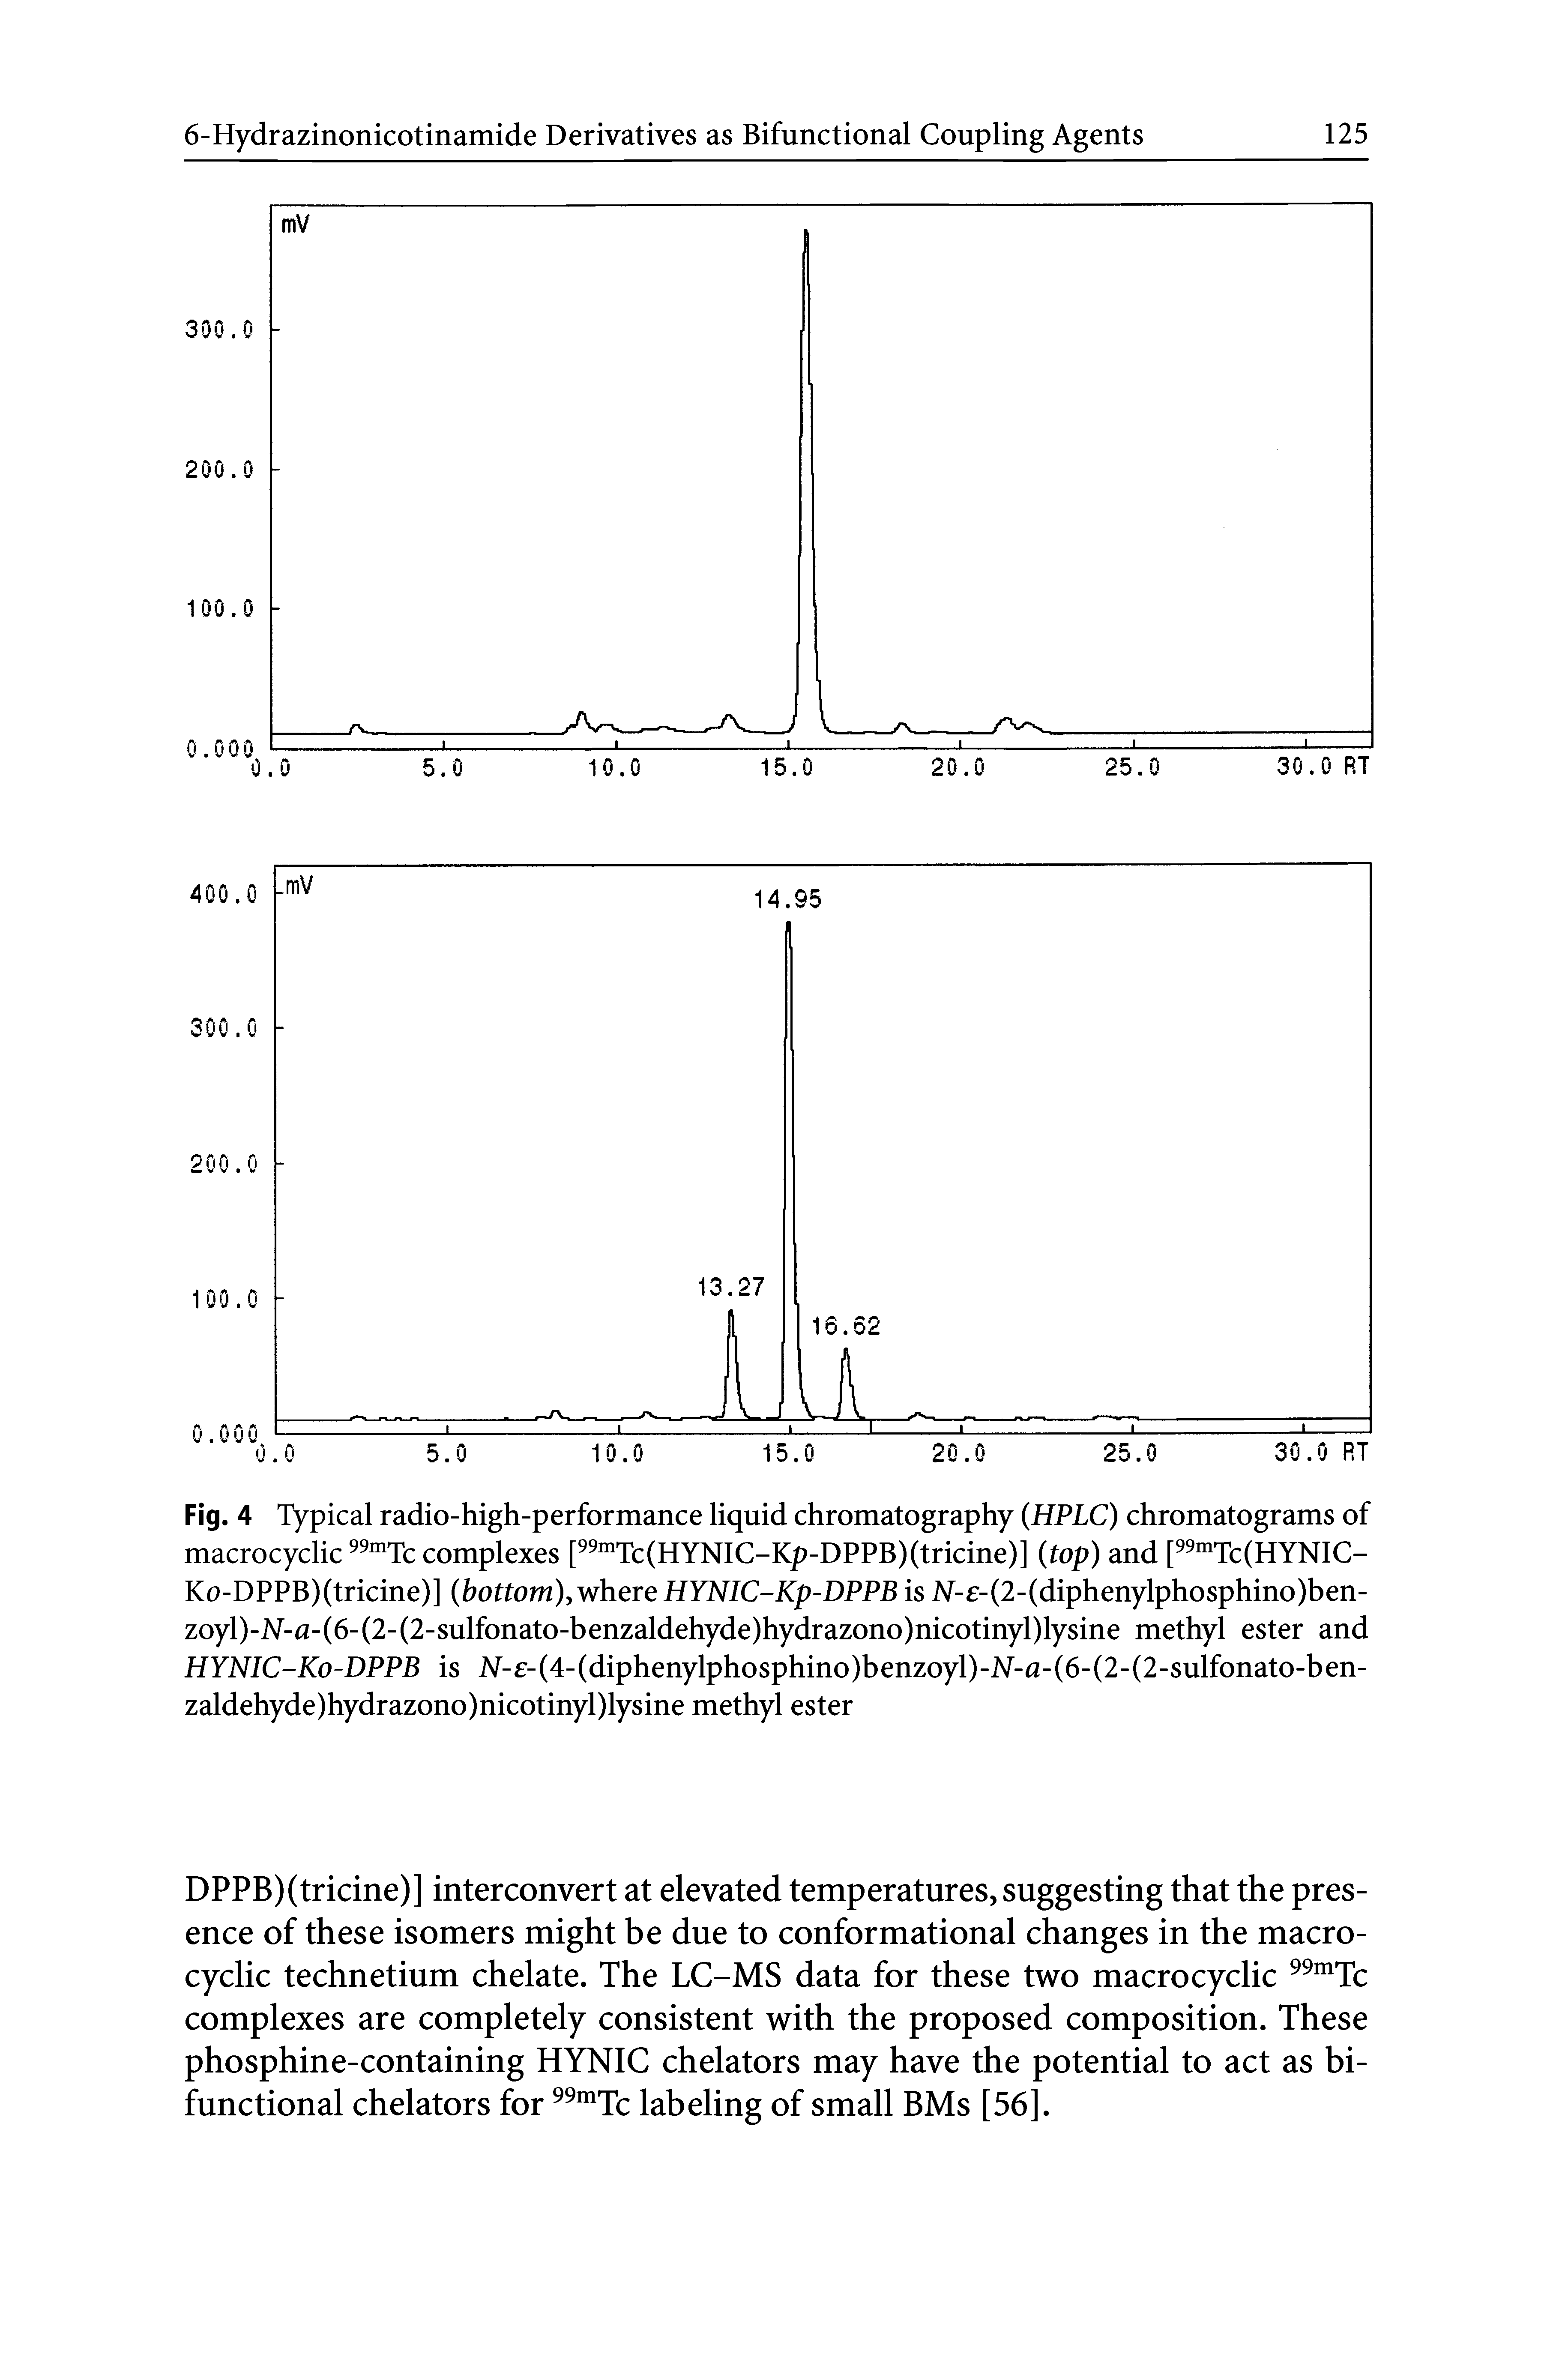 Fig. 4 Typical radio-high-performance liquid chromatography (HPLC) chromatograms of macrocyclic 99mTc complexes [99mTc(HYNIC-Kp-DPPB)(tricine)] (top) and [99mTc(HYNIC-Ko-DPPB)(tricine)] (bottom), where HYNIC-Kp-DPPB is iST- -(2-(diphenylphosphino)ben-zoyl)-N-a-(6-(2-(2-sulfonato-benzaldehyde)hydrazono)nicotinyl)lysine methyl ester and HYNIC-Ko-DPPB is iSr- -(4-(diphenylphosphino)benzoyl)-AT-fl-(6-(2-(2-sulfonato-ben-zaldehyde)hydrazono)nicotinyl)lysine methyl ester...